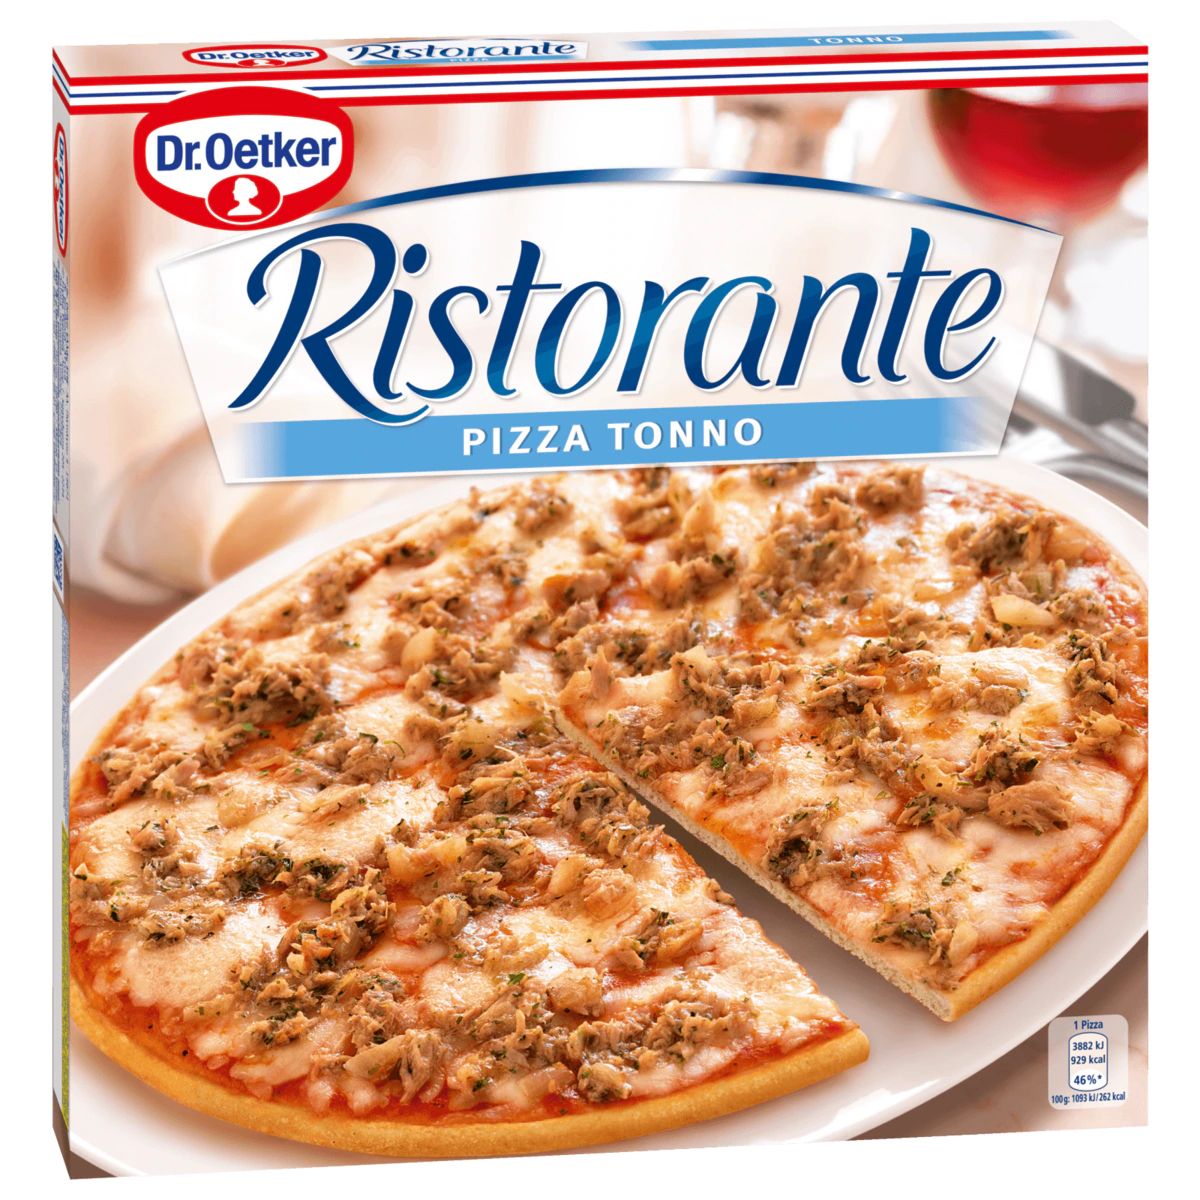  Dr Oetker Ristorante Pizza Tonno 355g - Pizza cá ngừ 